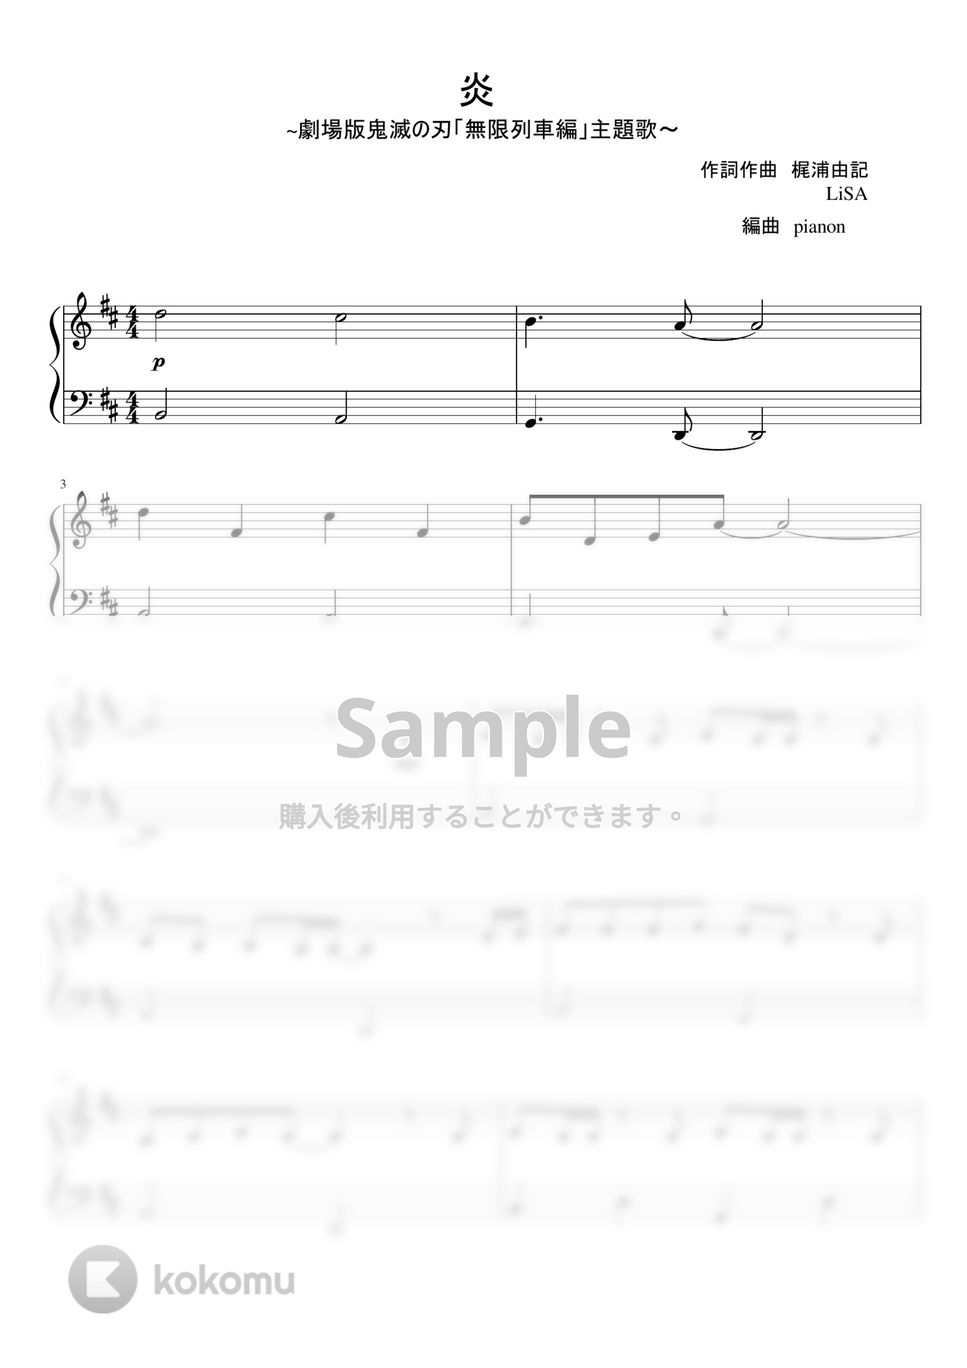 LiSA - 炎 (ピアノ初級) by pianon